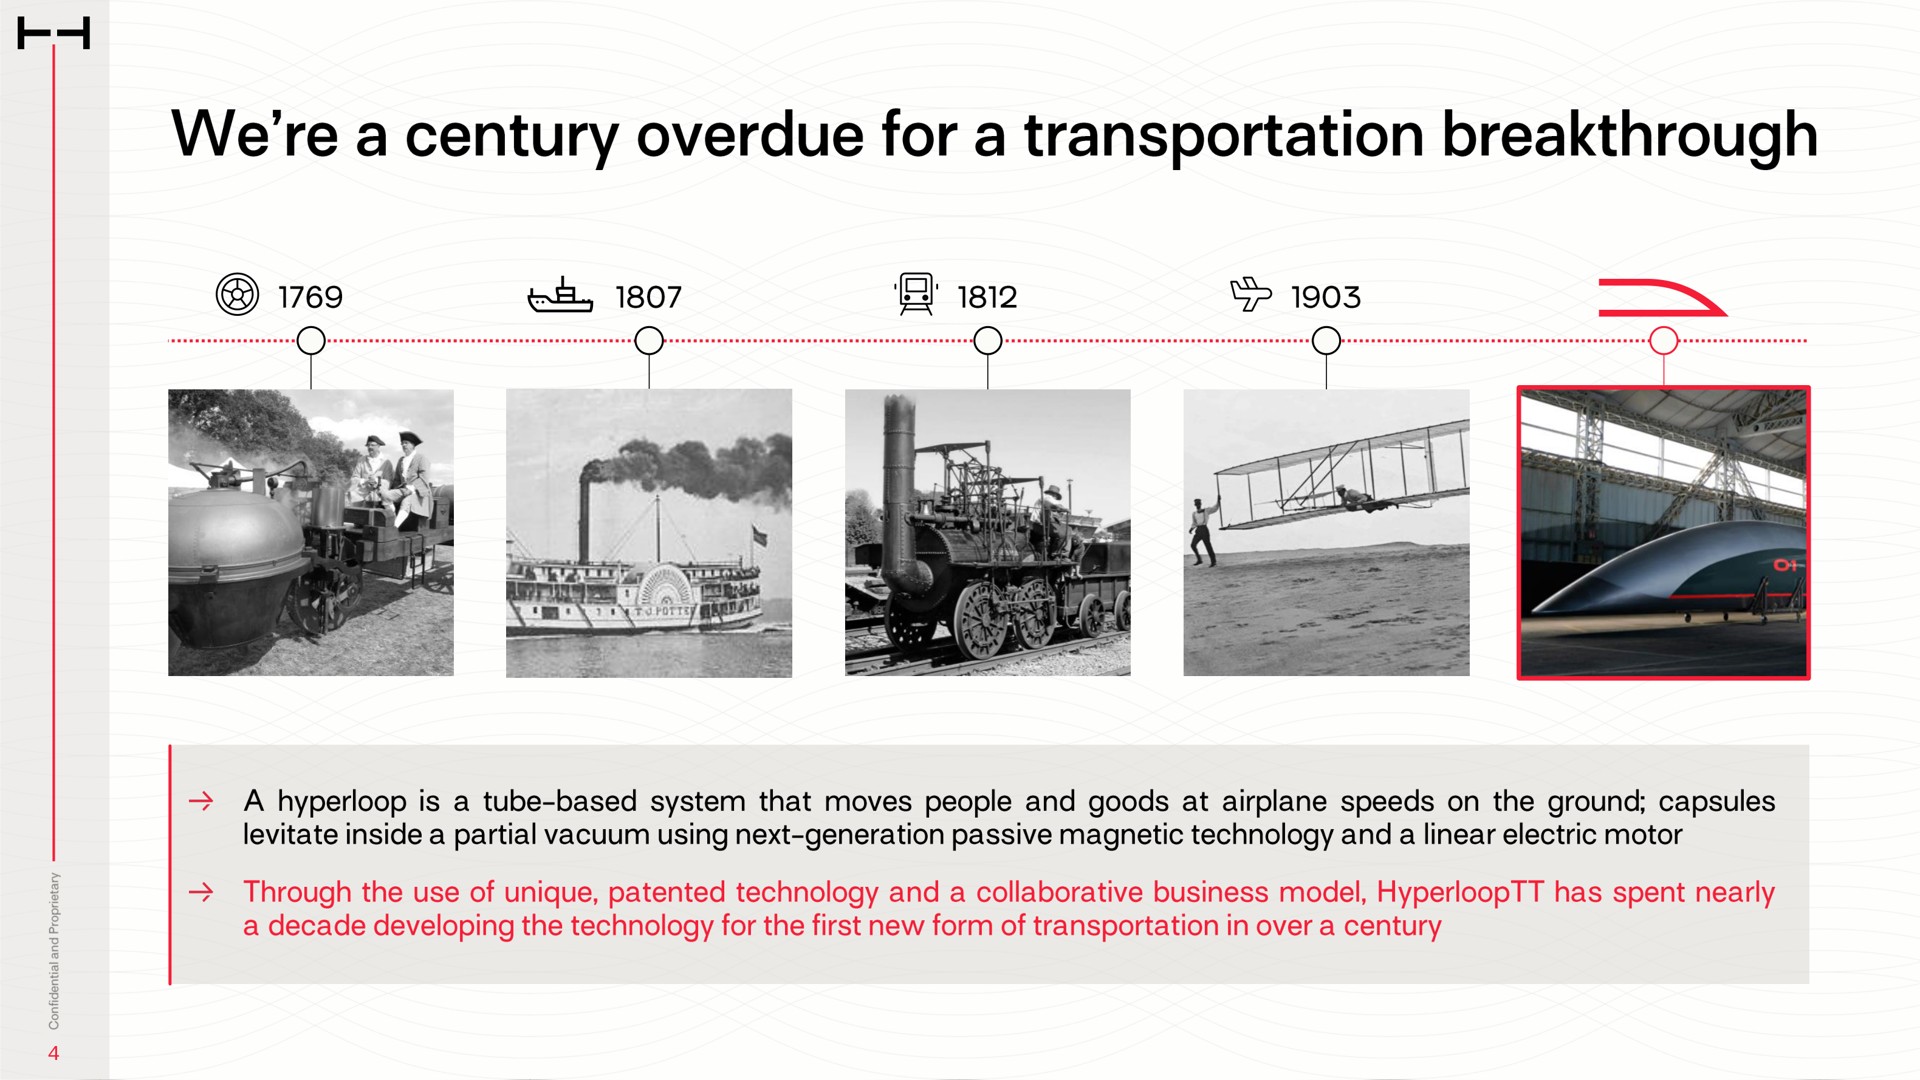 we a century overdue for a transportation breakthrough | HyperloopTT